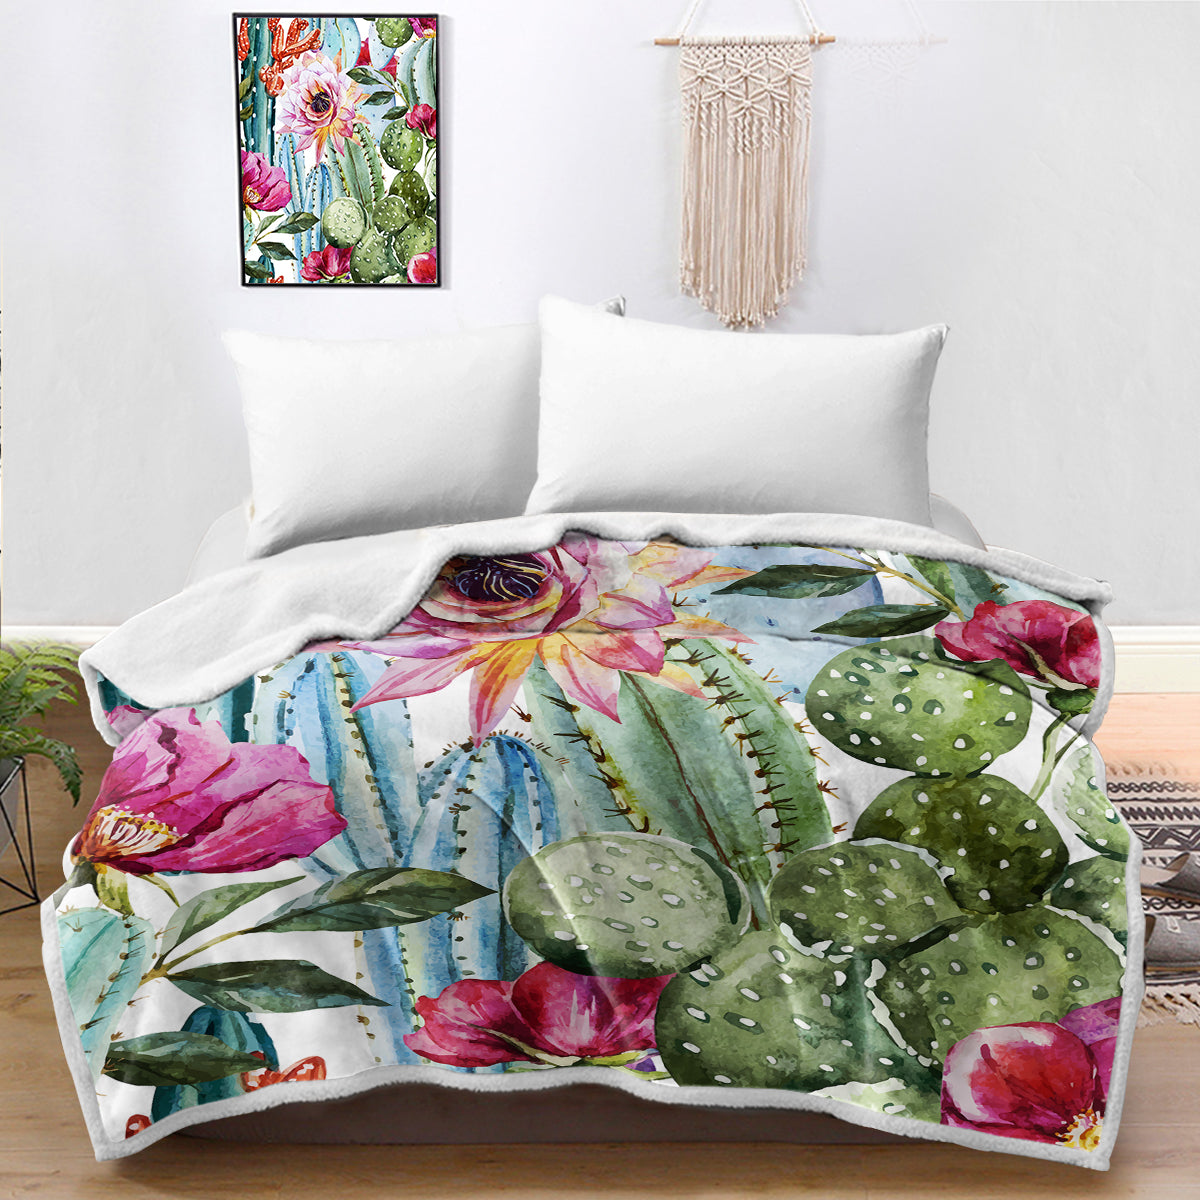 Colorful Cacti Bedspread Blanket